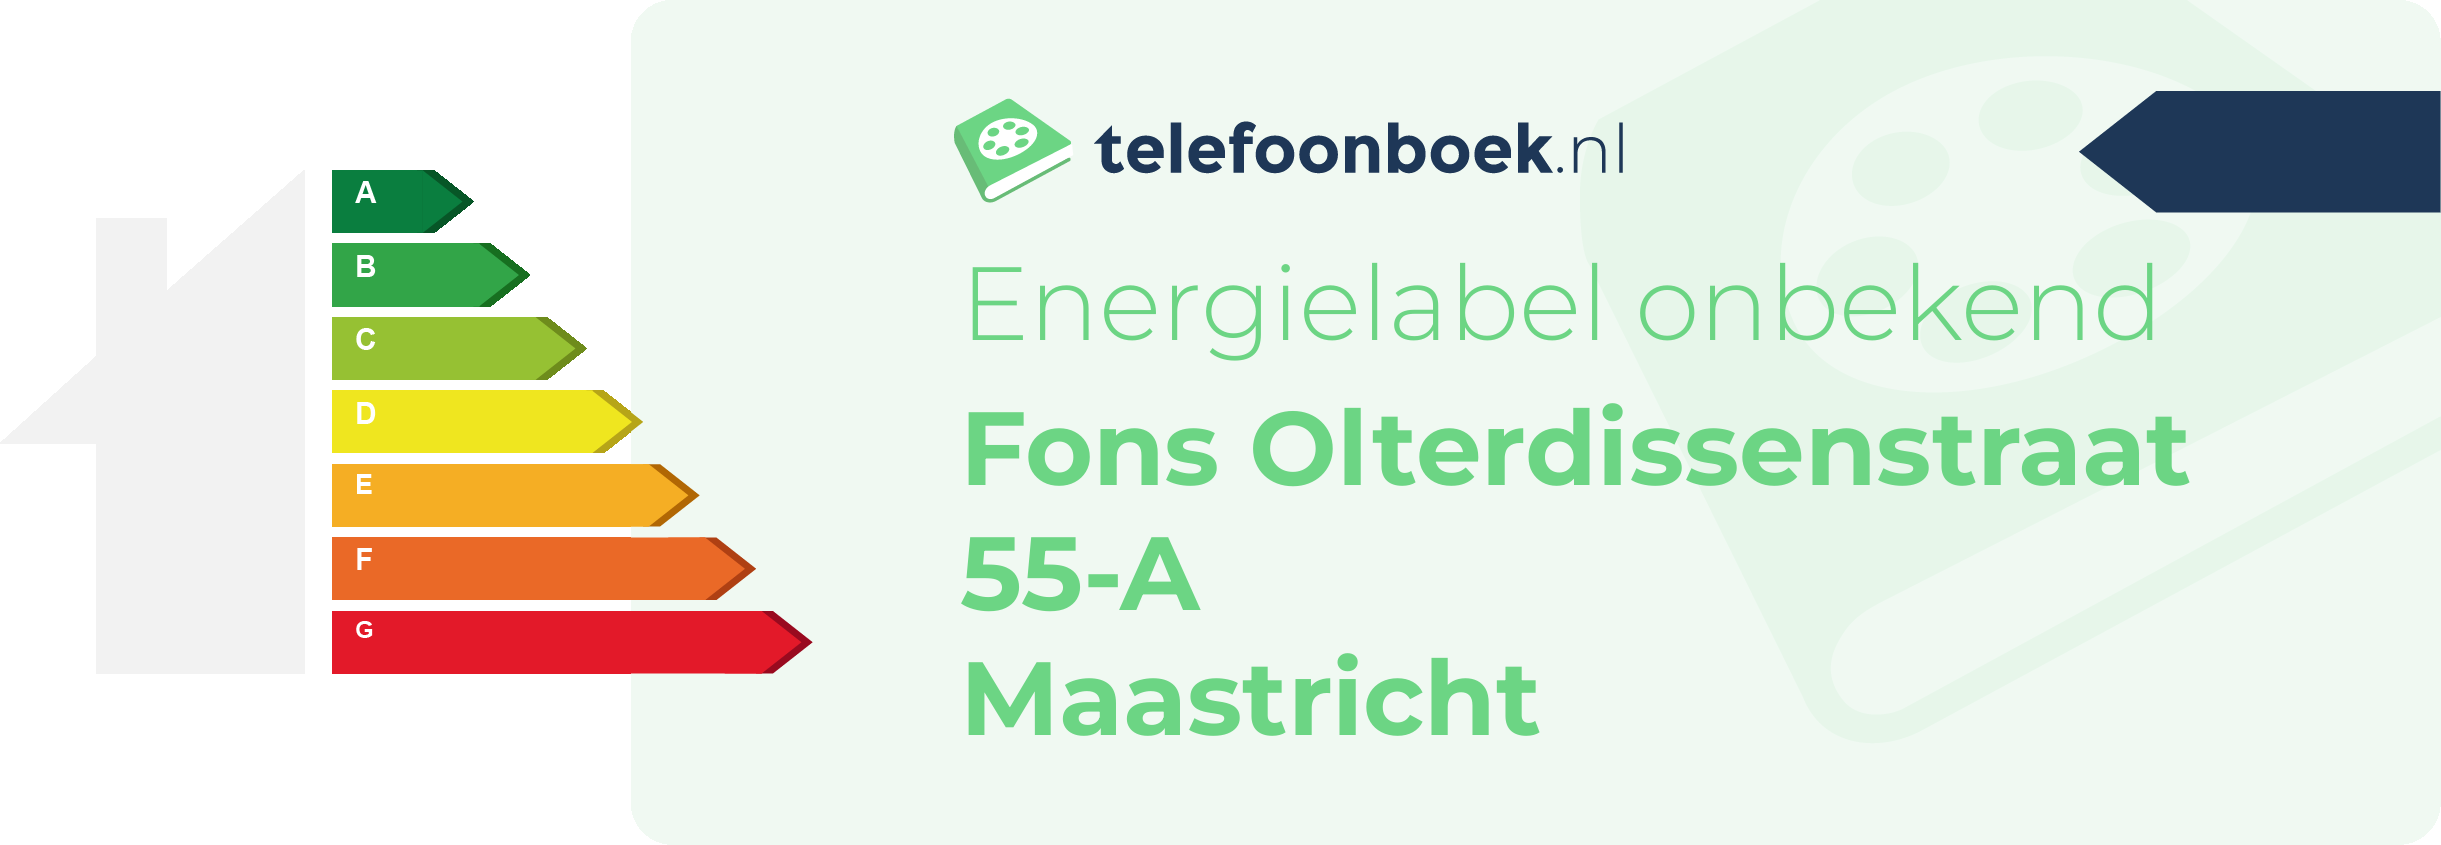 Energielabel Fons Olterdissenstraat 55-A Maastricht